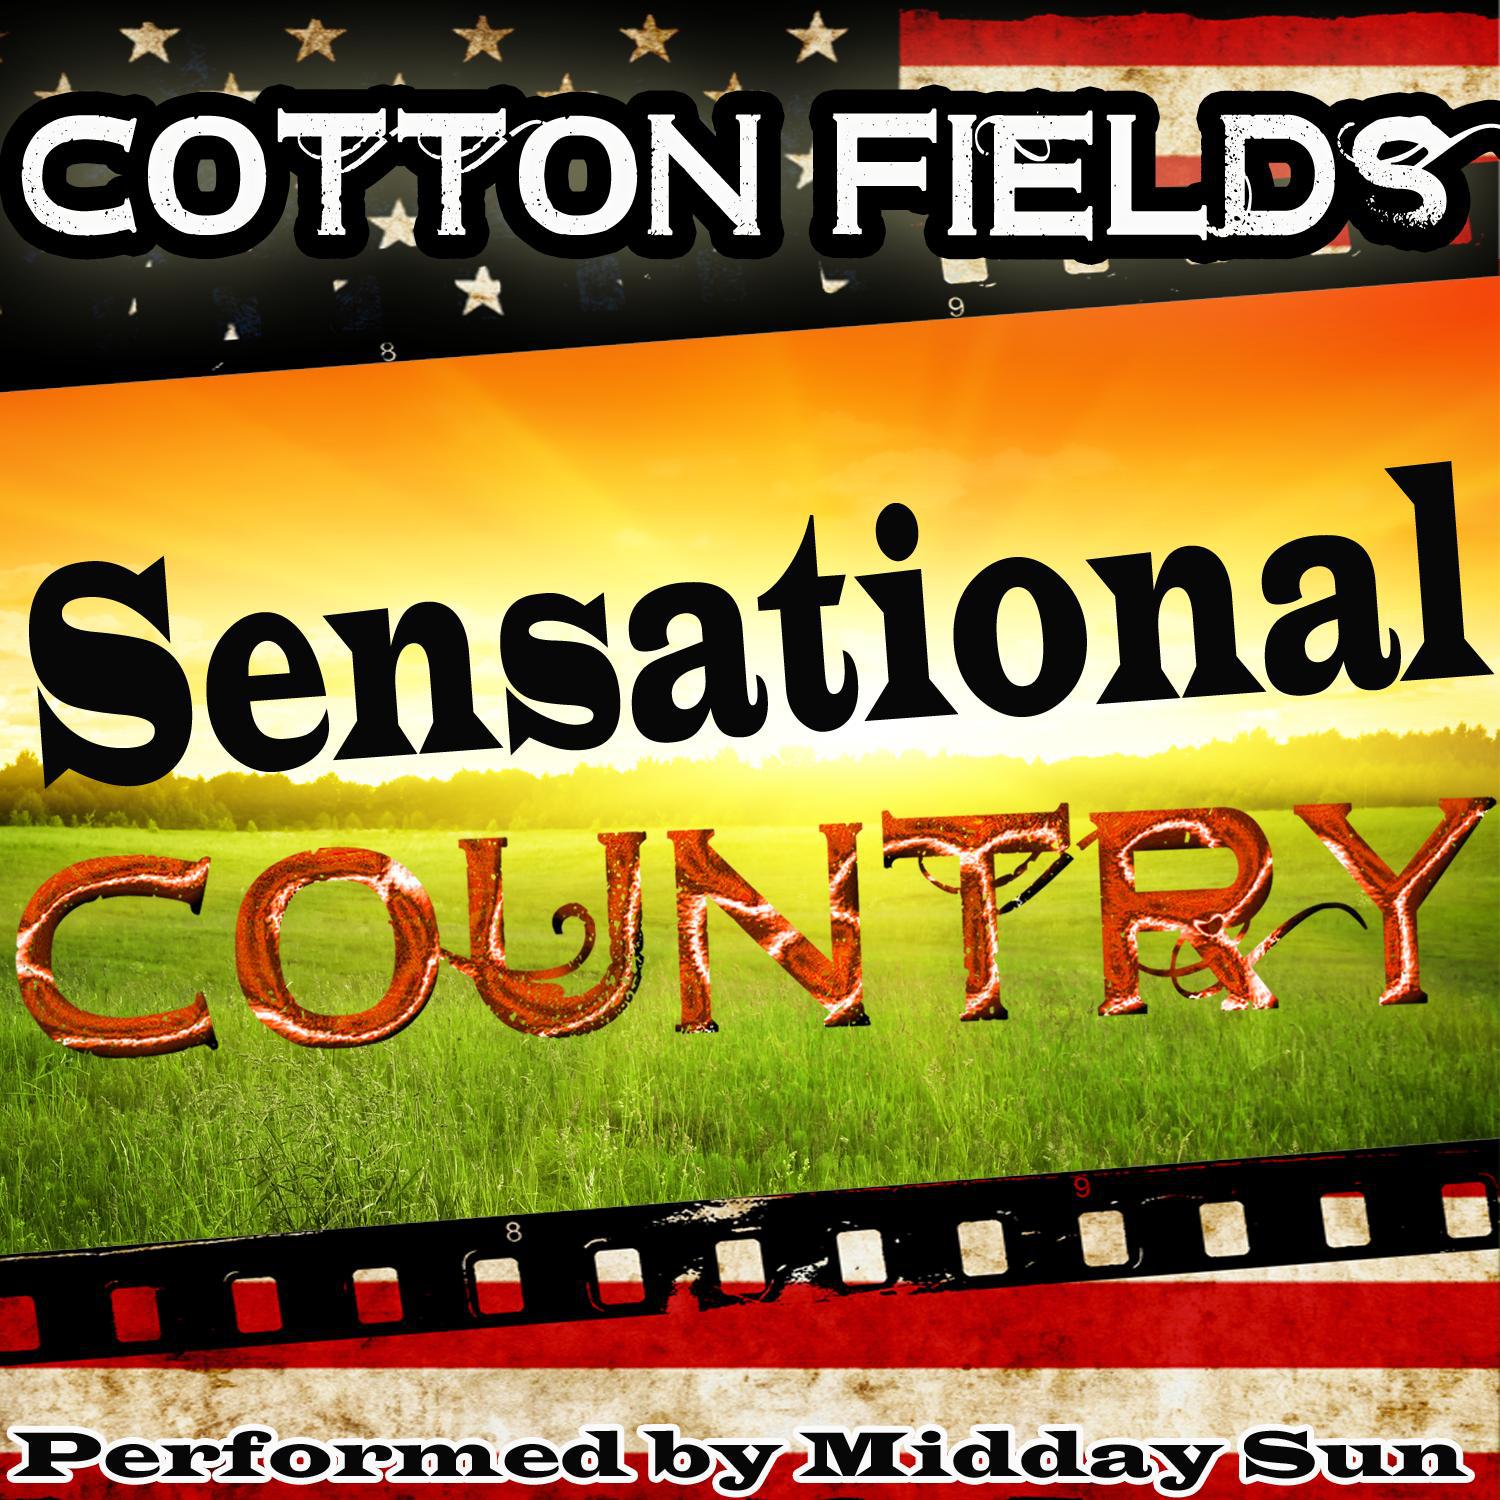 Cotton Fields: Sensational Country